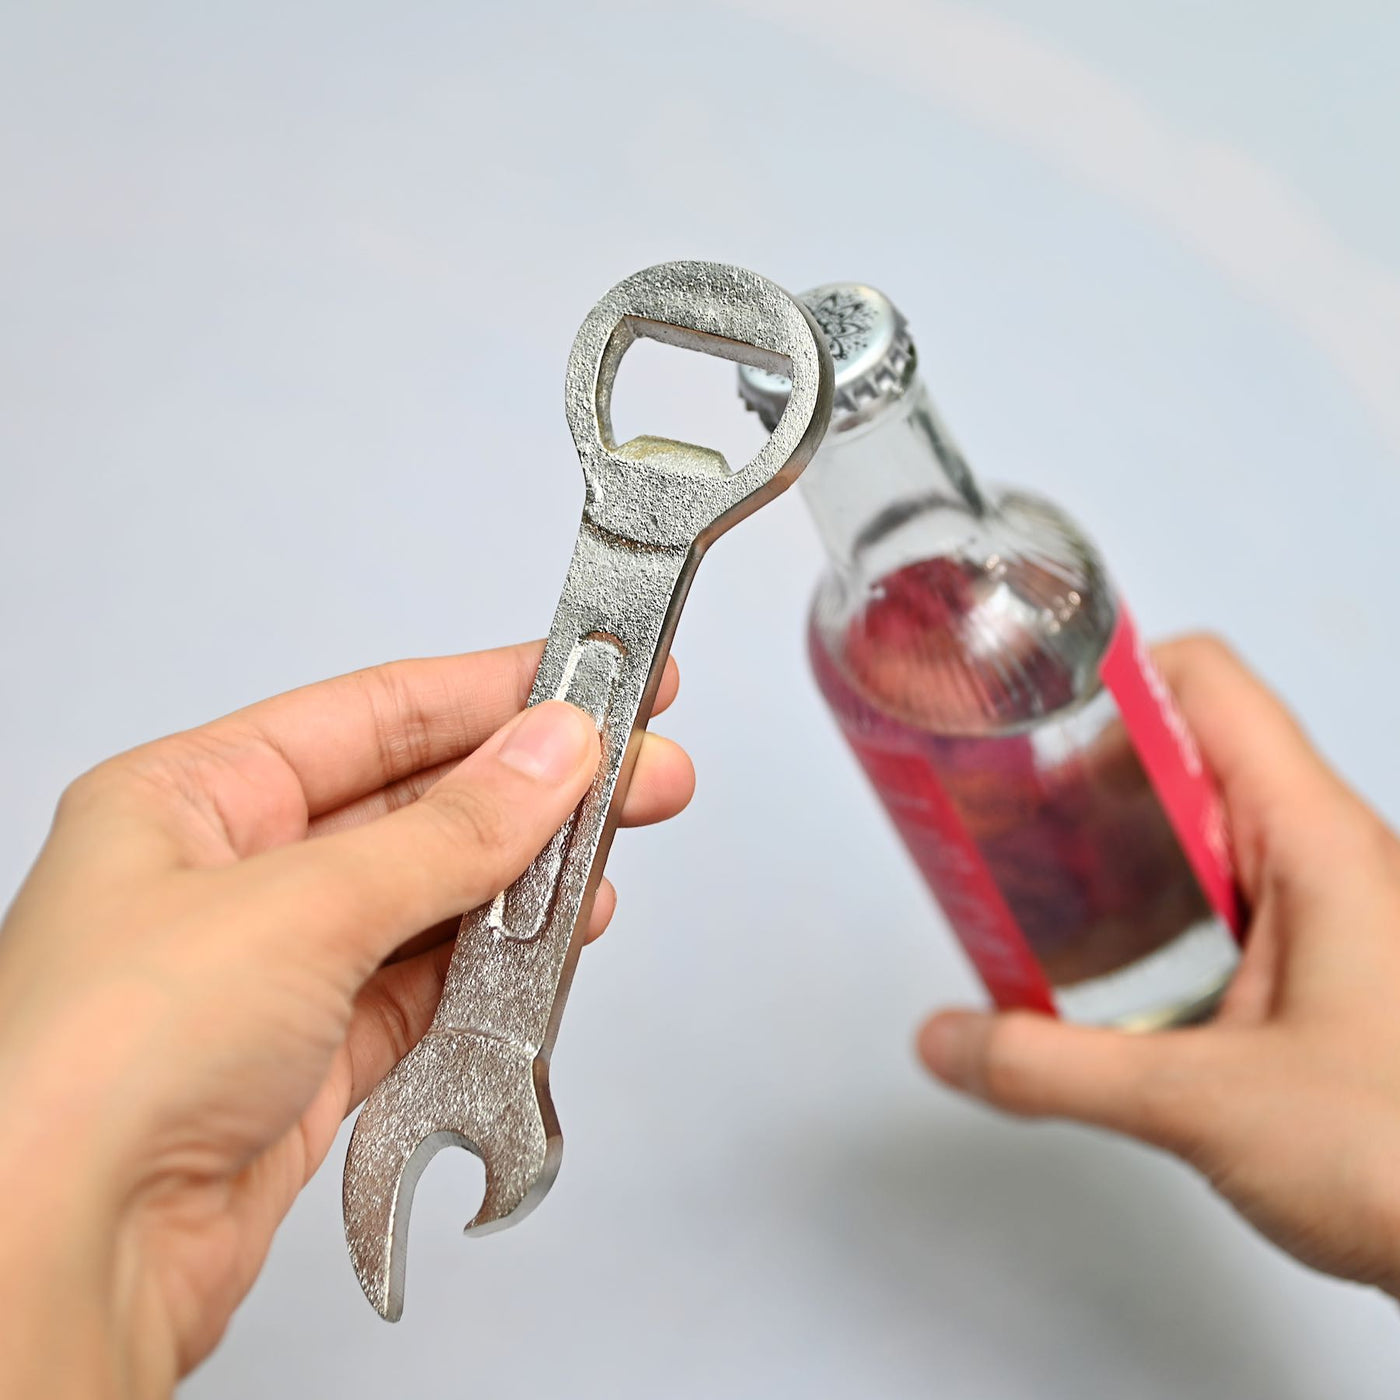 metal wrench shaped bottle opener